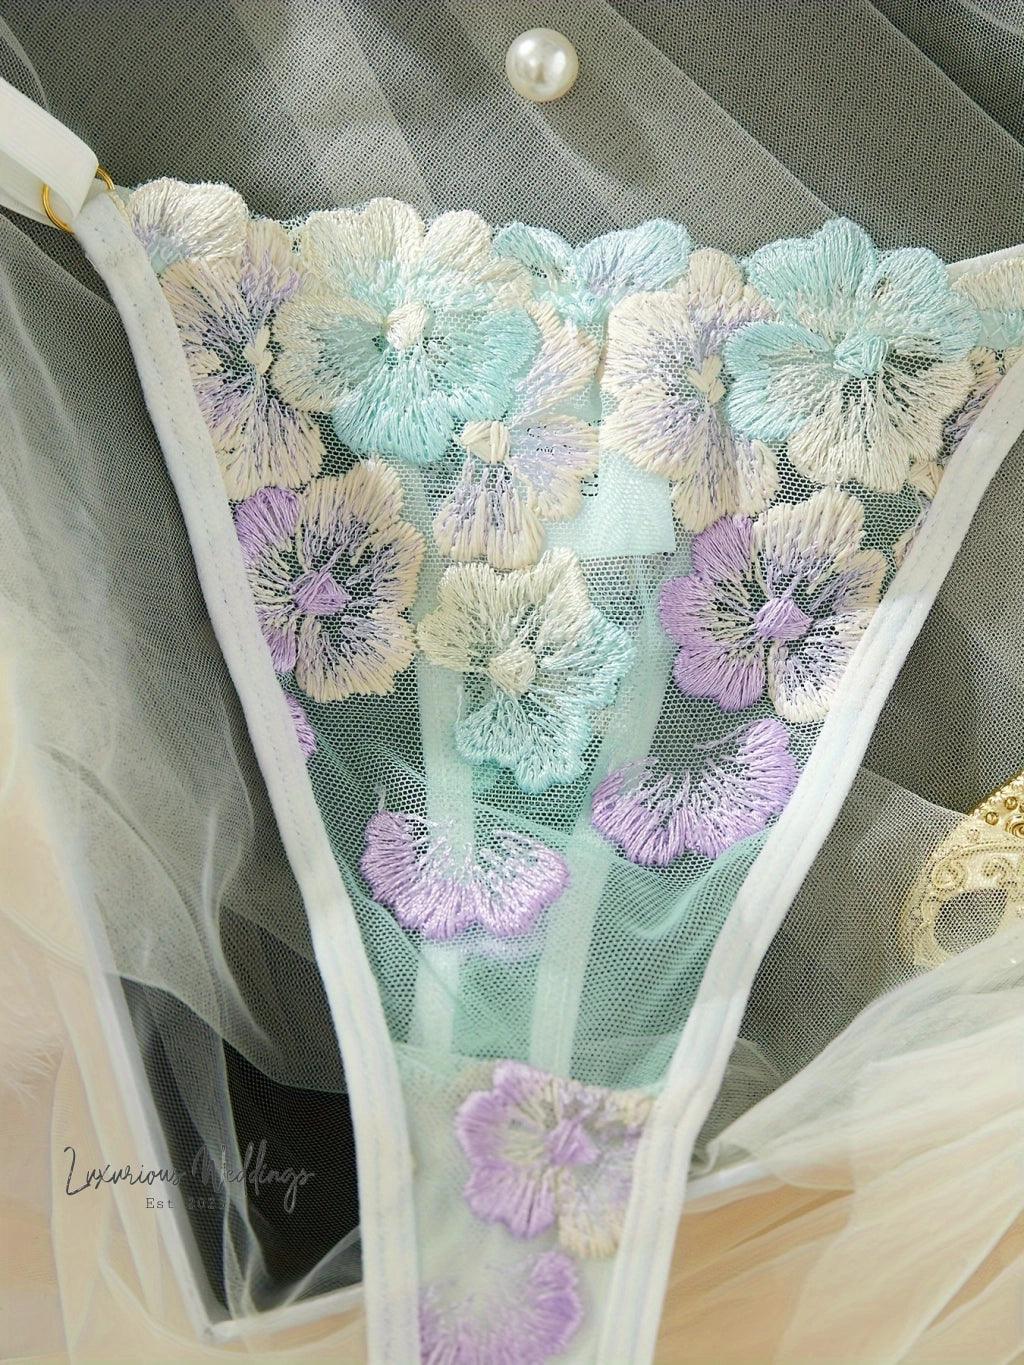 Sexy Floral Lace Lingerie Set - Luxurious Weddings